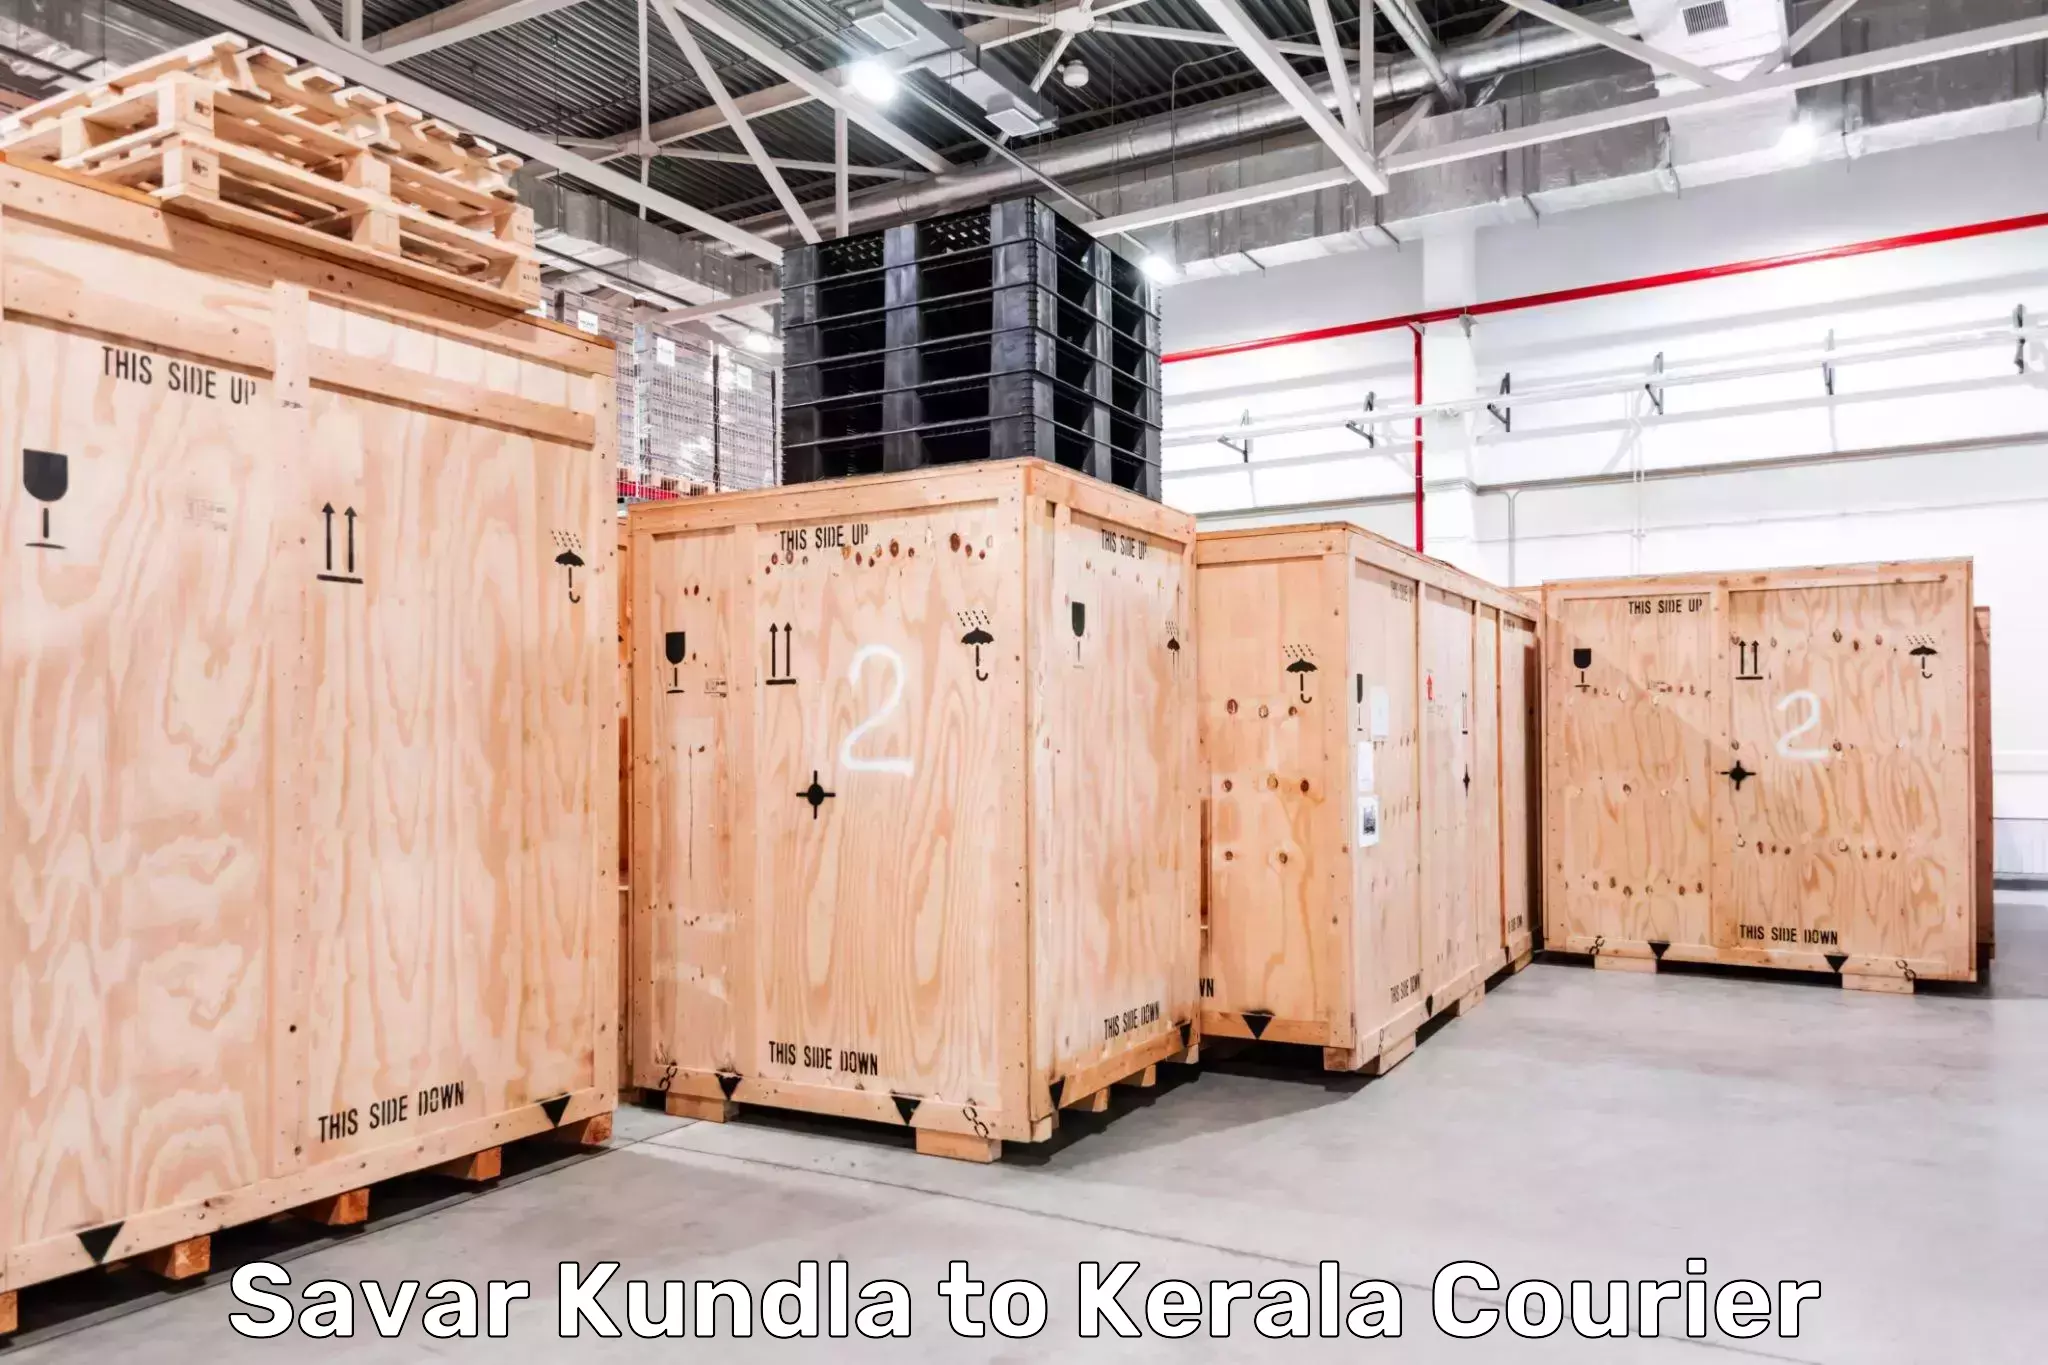 High-speed delivery Savar Kundla to Kerala